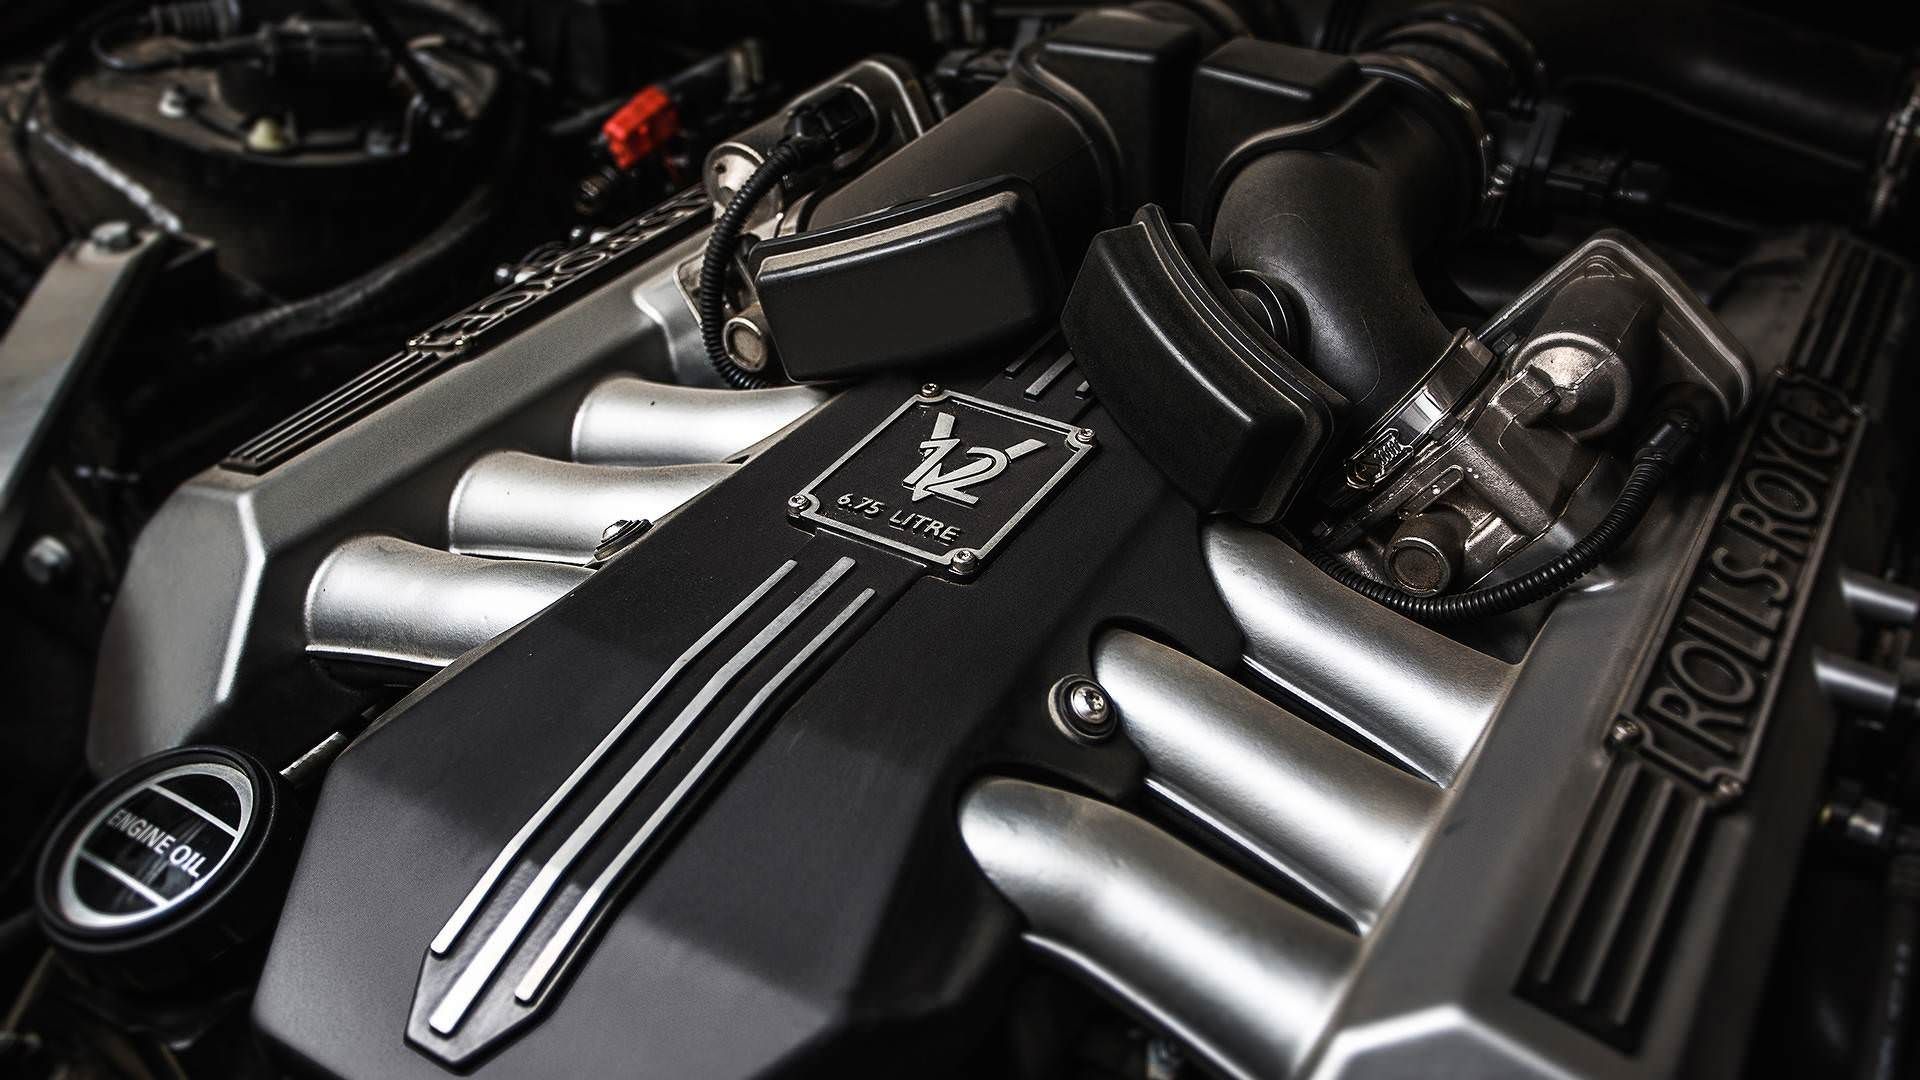 Rolls-Royce Phantom Drophead Coupe / کوپه کروک رولزرویس فانتوم